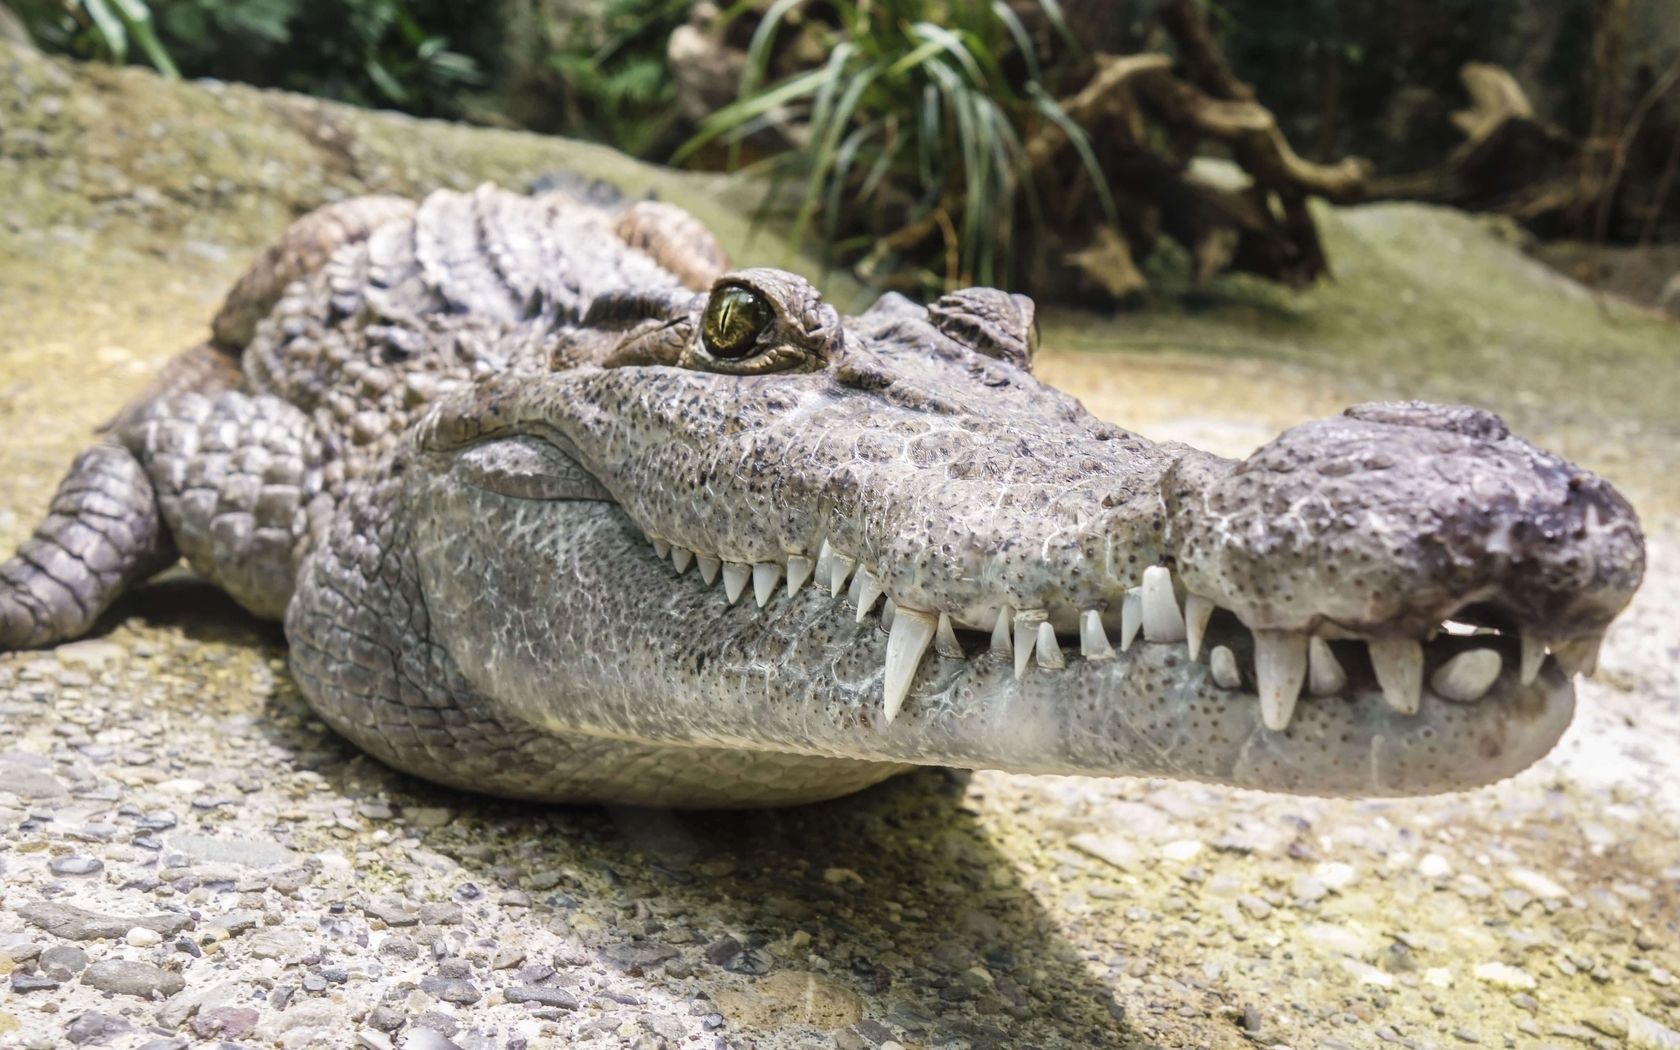 Image: Crocodile, reptile, muzzle, teeth, mouth, eye, stone